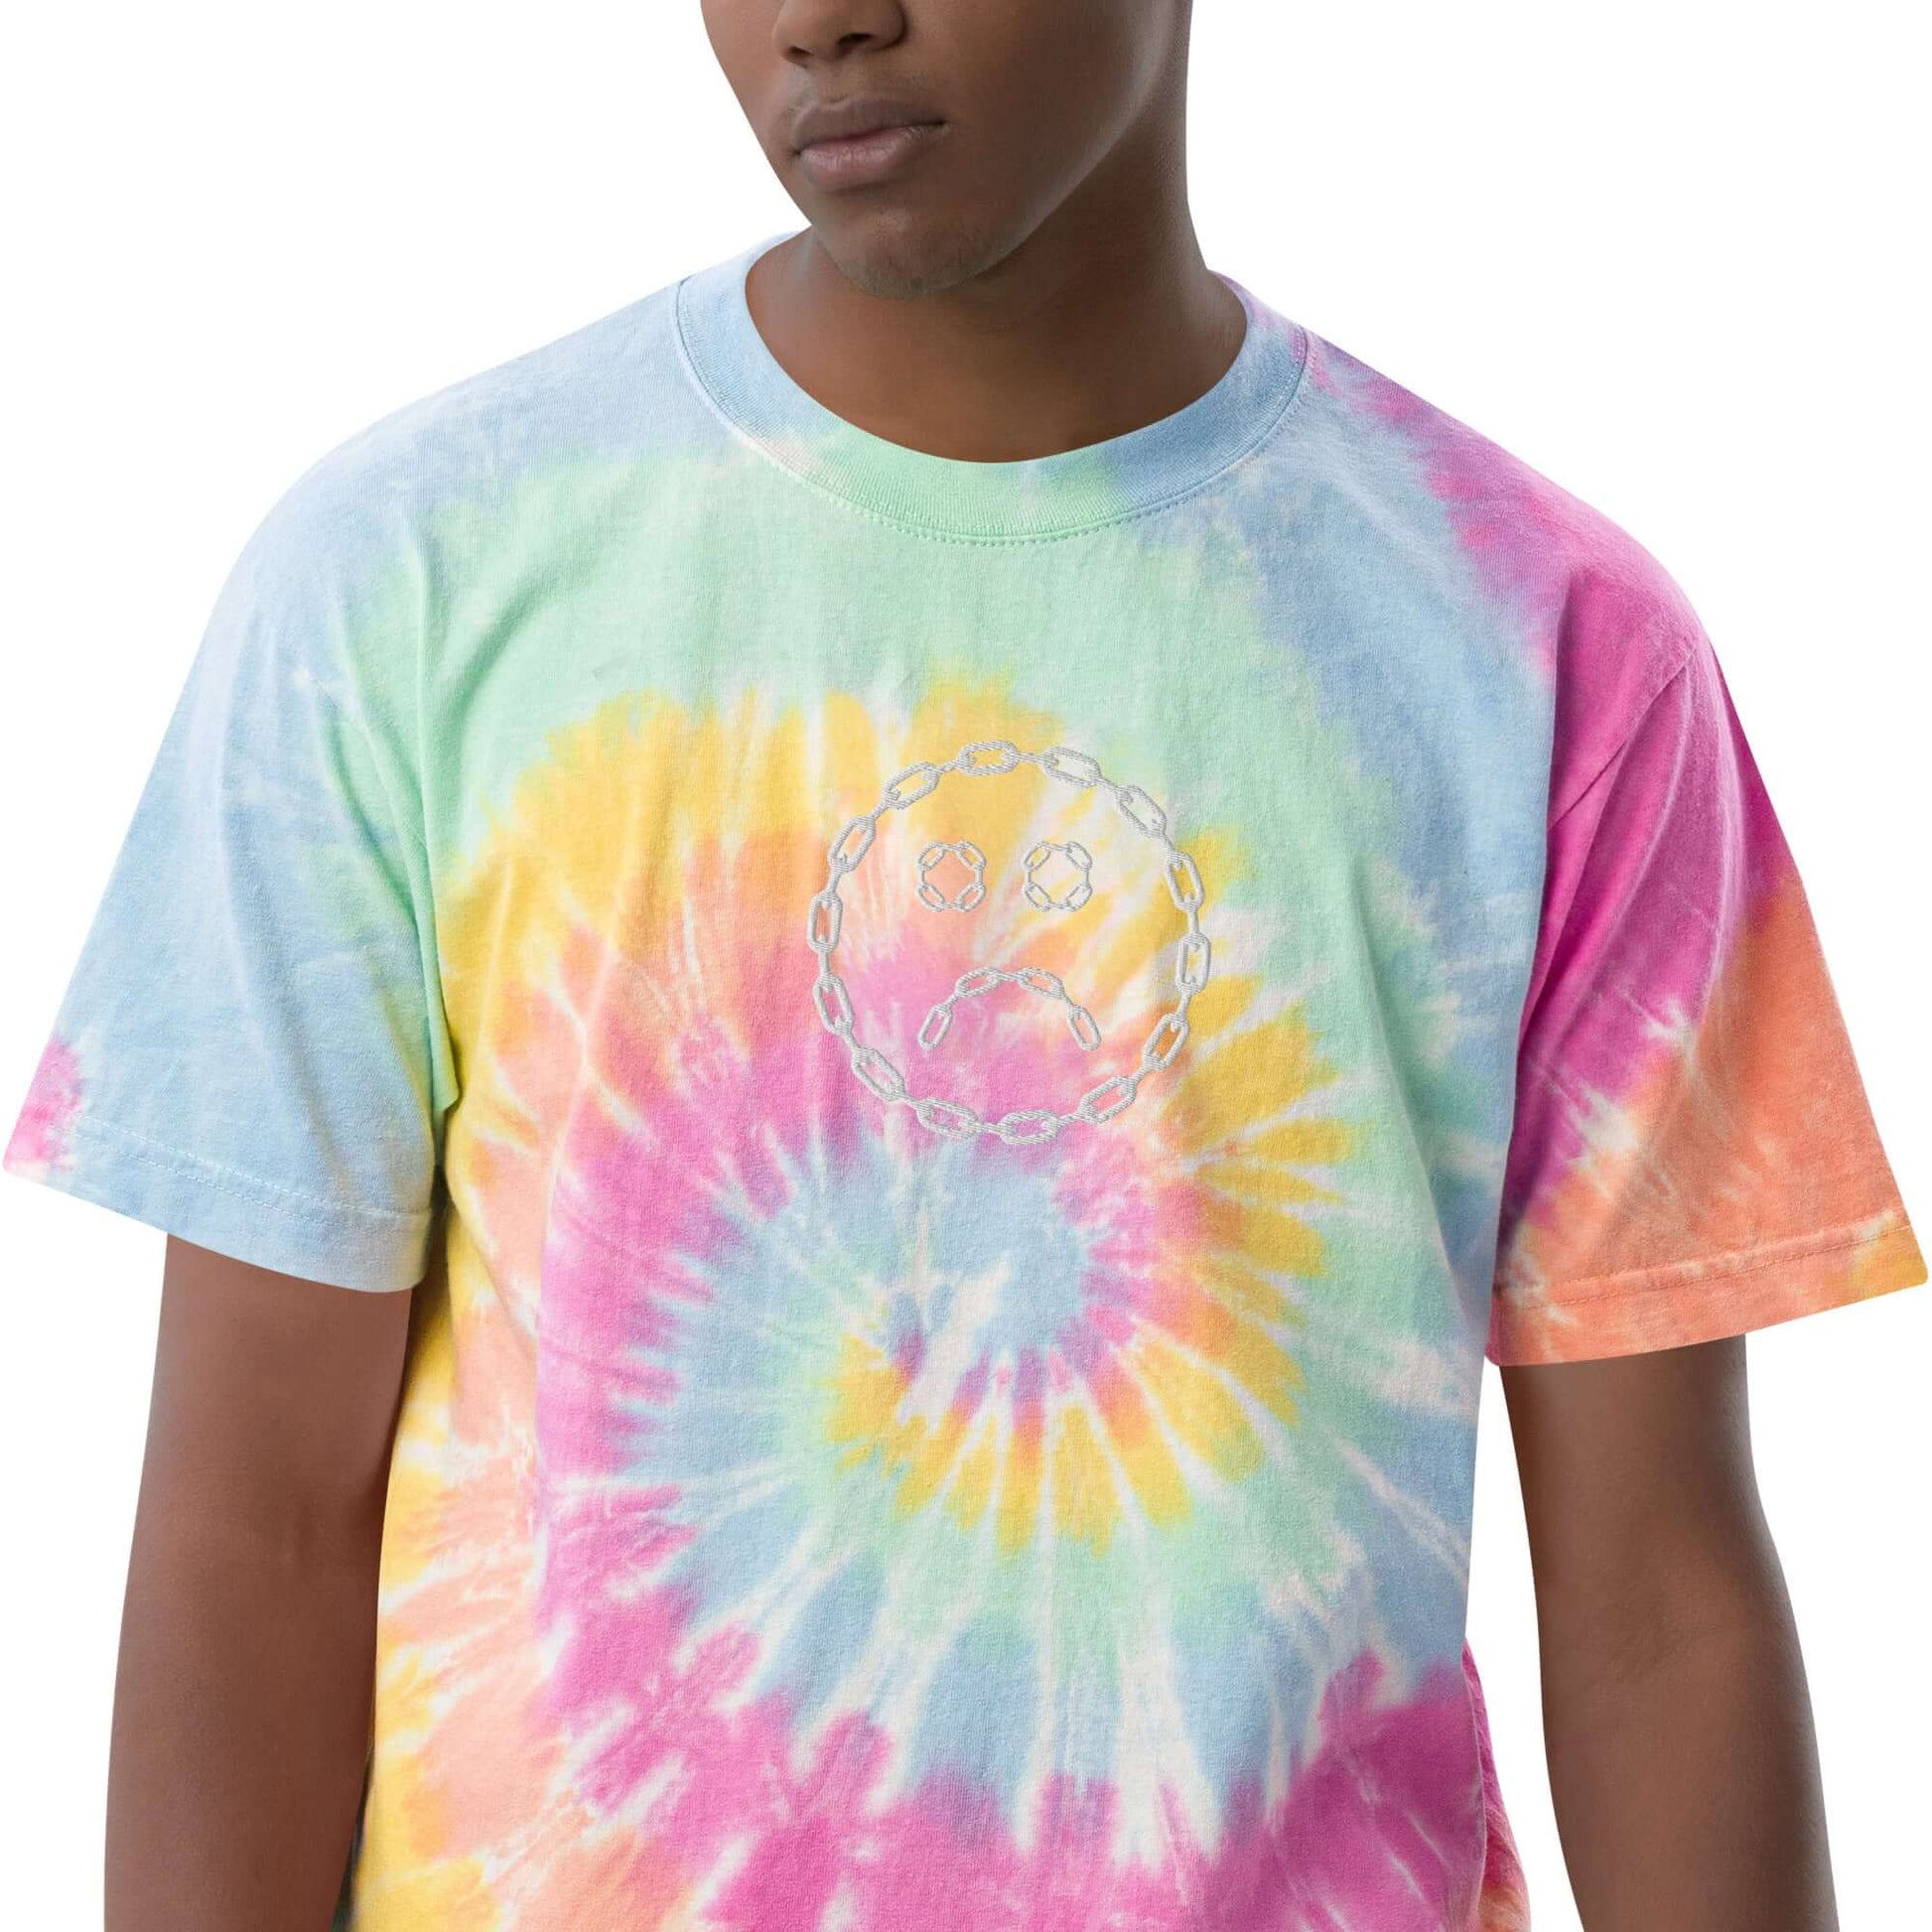 Sad Chain Face Oversized tie-dye t-shirt Sherbet rainbow